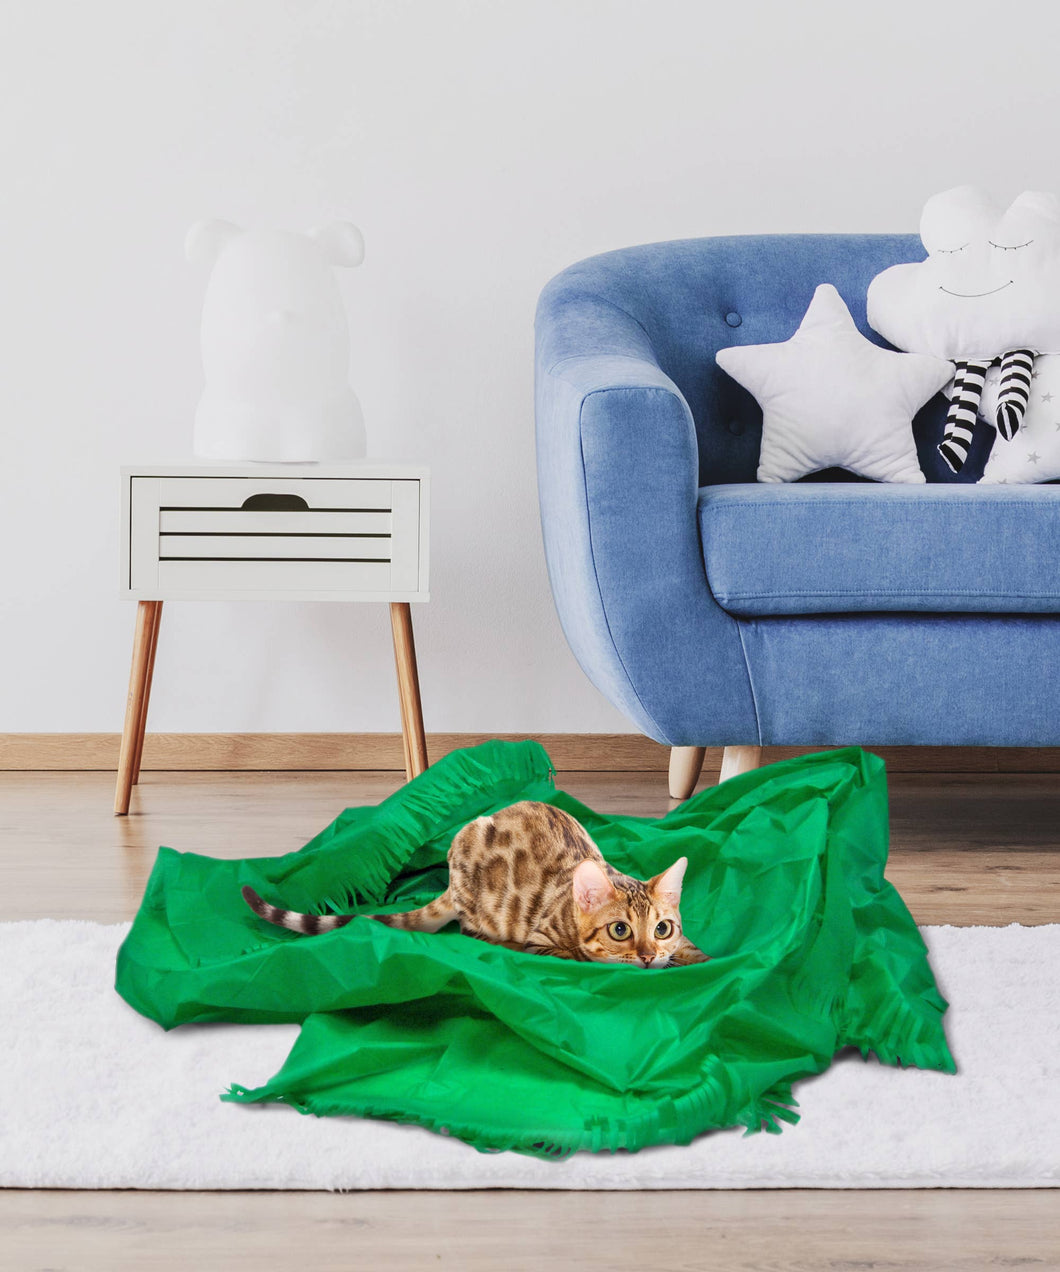 Magic Carpet - Play Tent for Cats